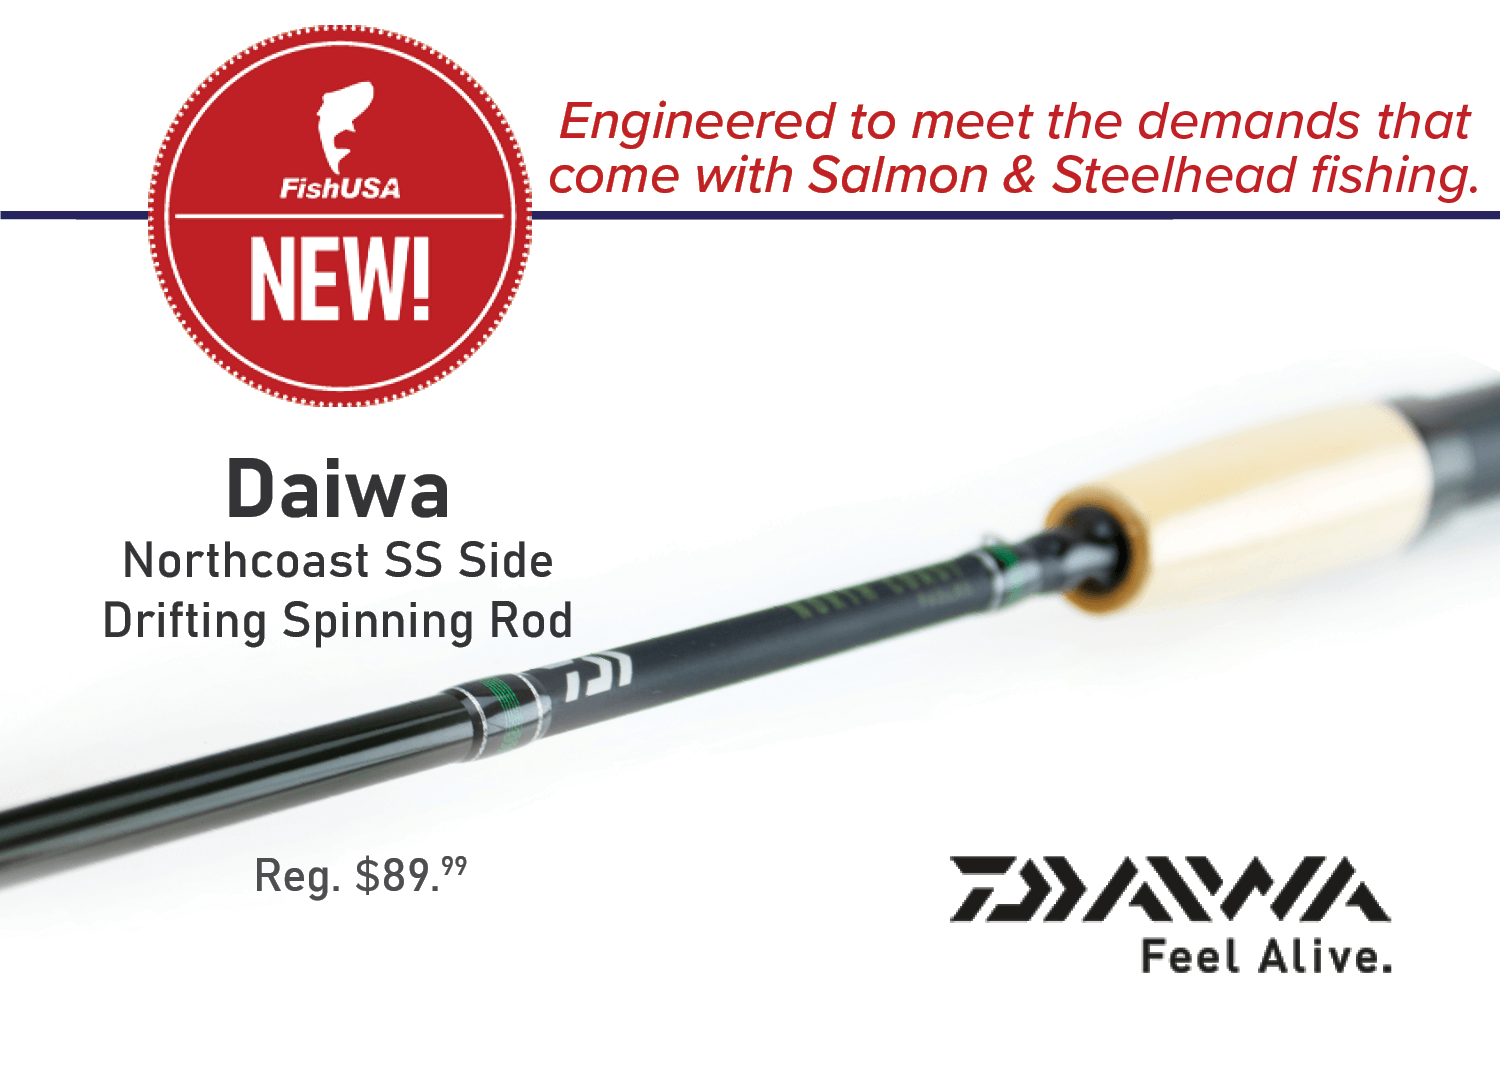 Daiwa Northcoast SS Side Drfiting Spinning Rod